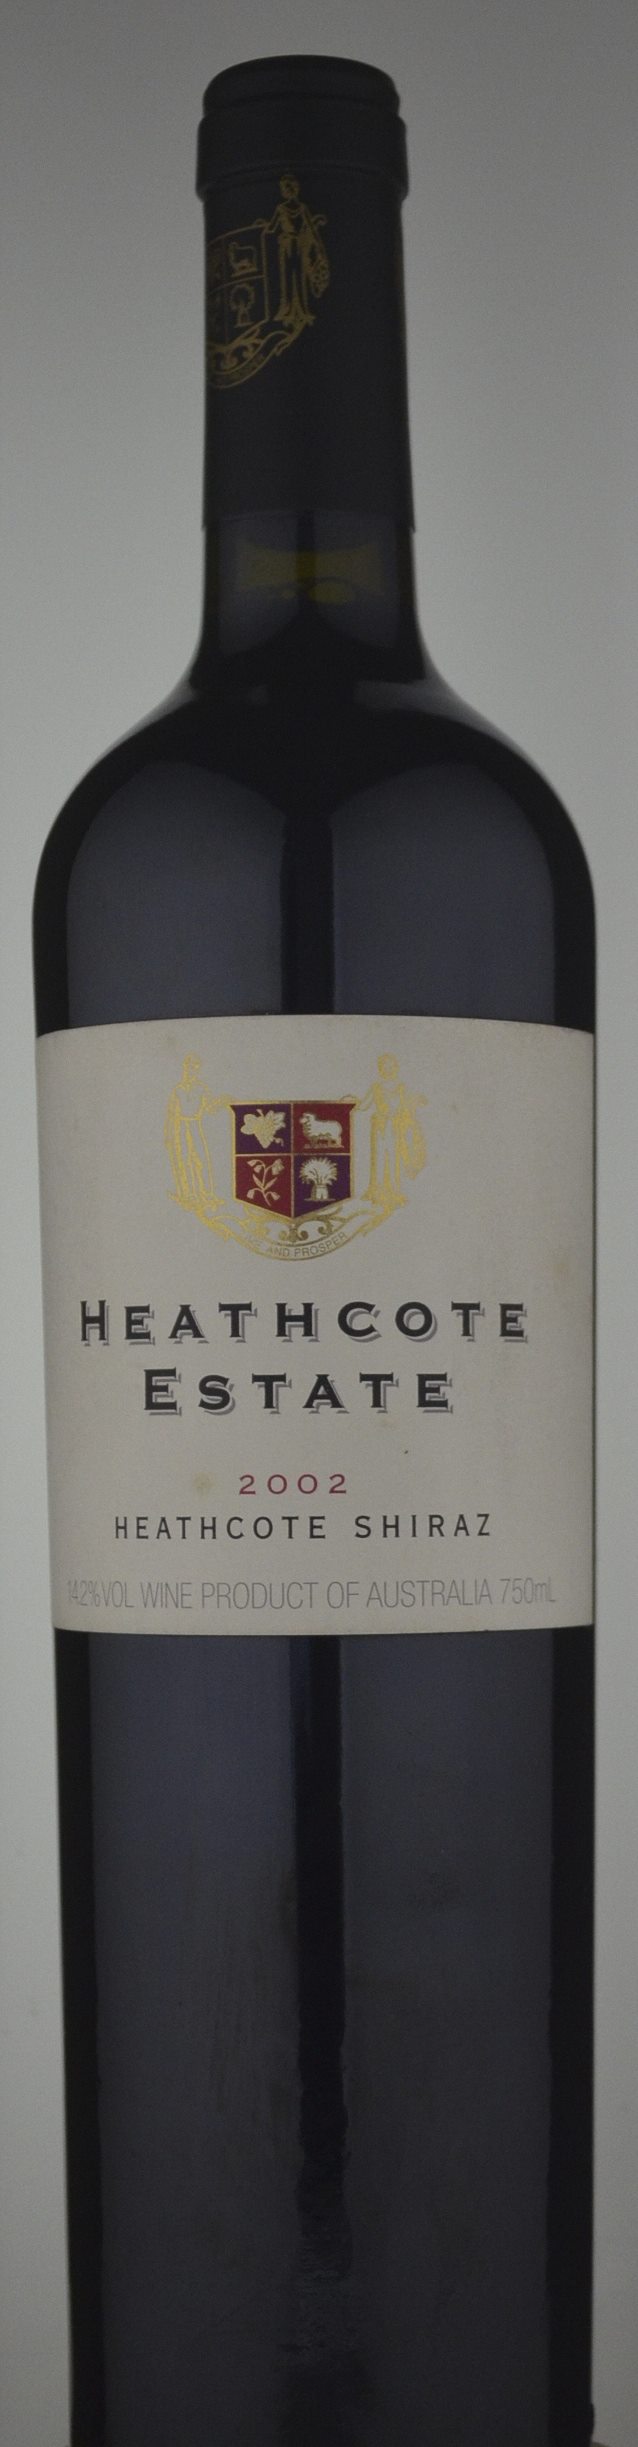 Heathcote Estate Heathcote Shiraz 2002